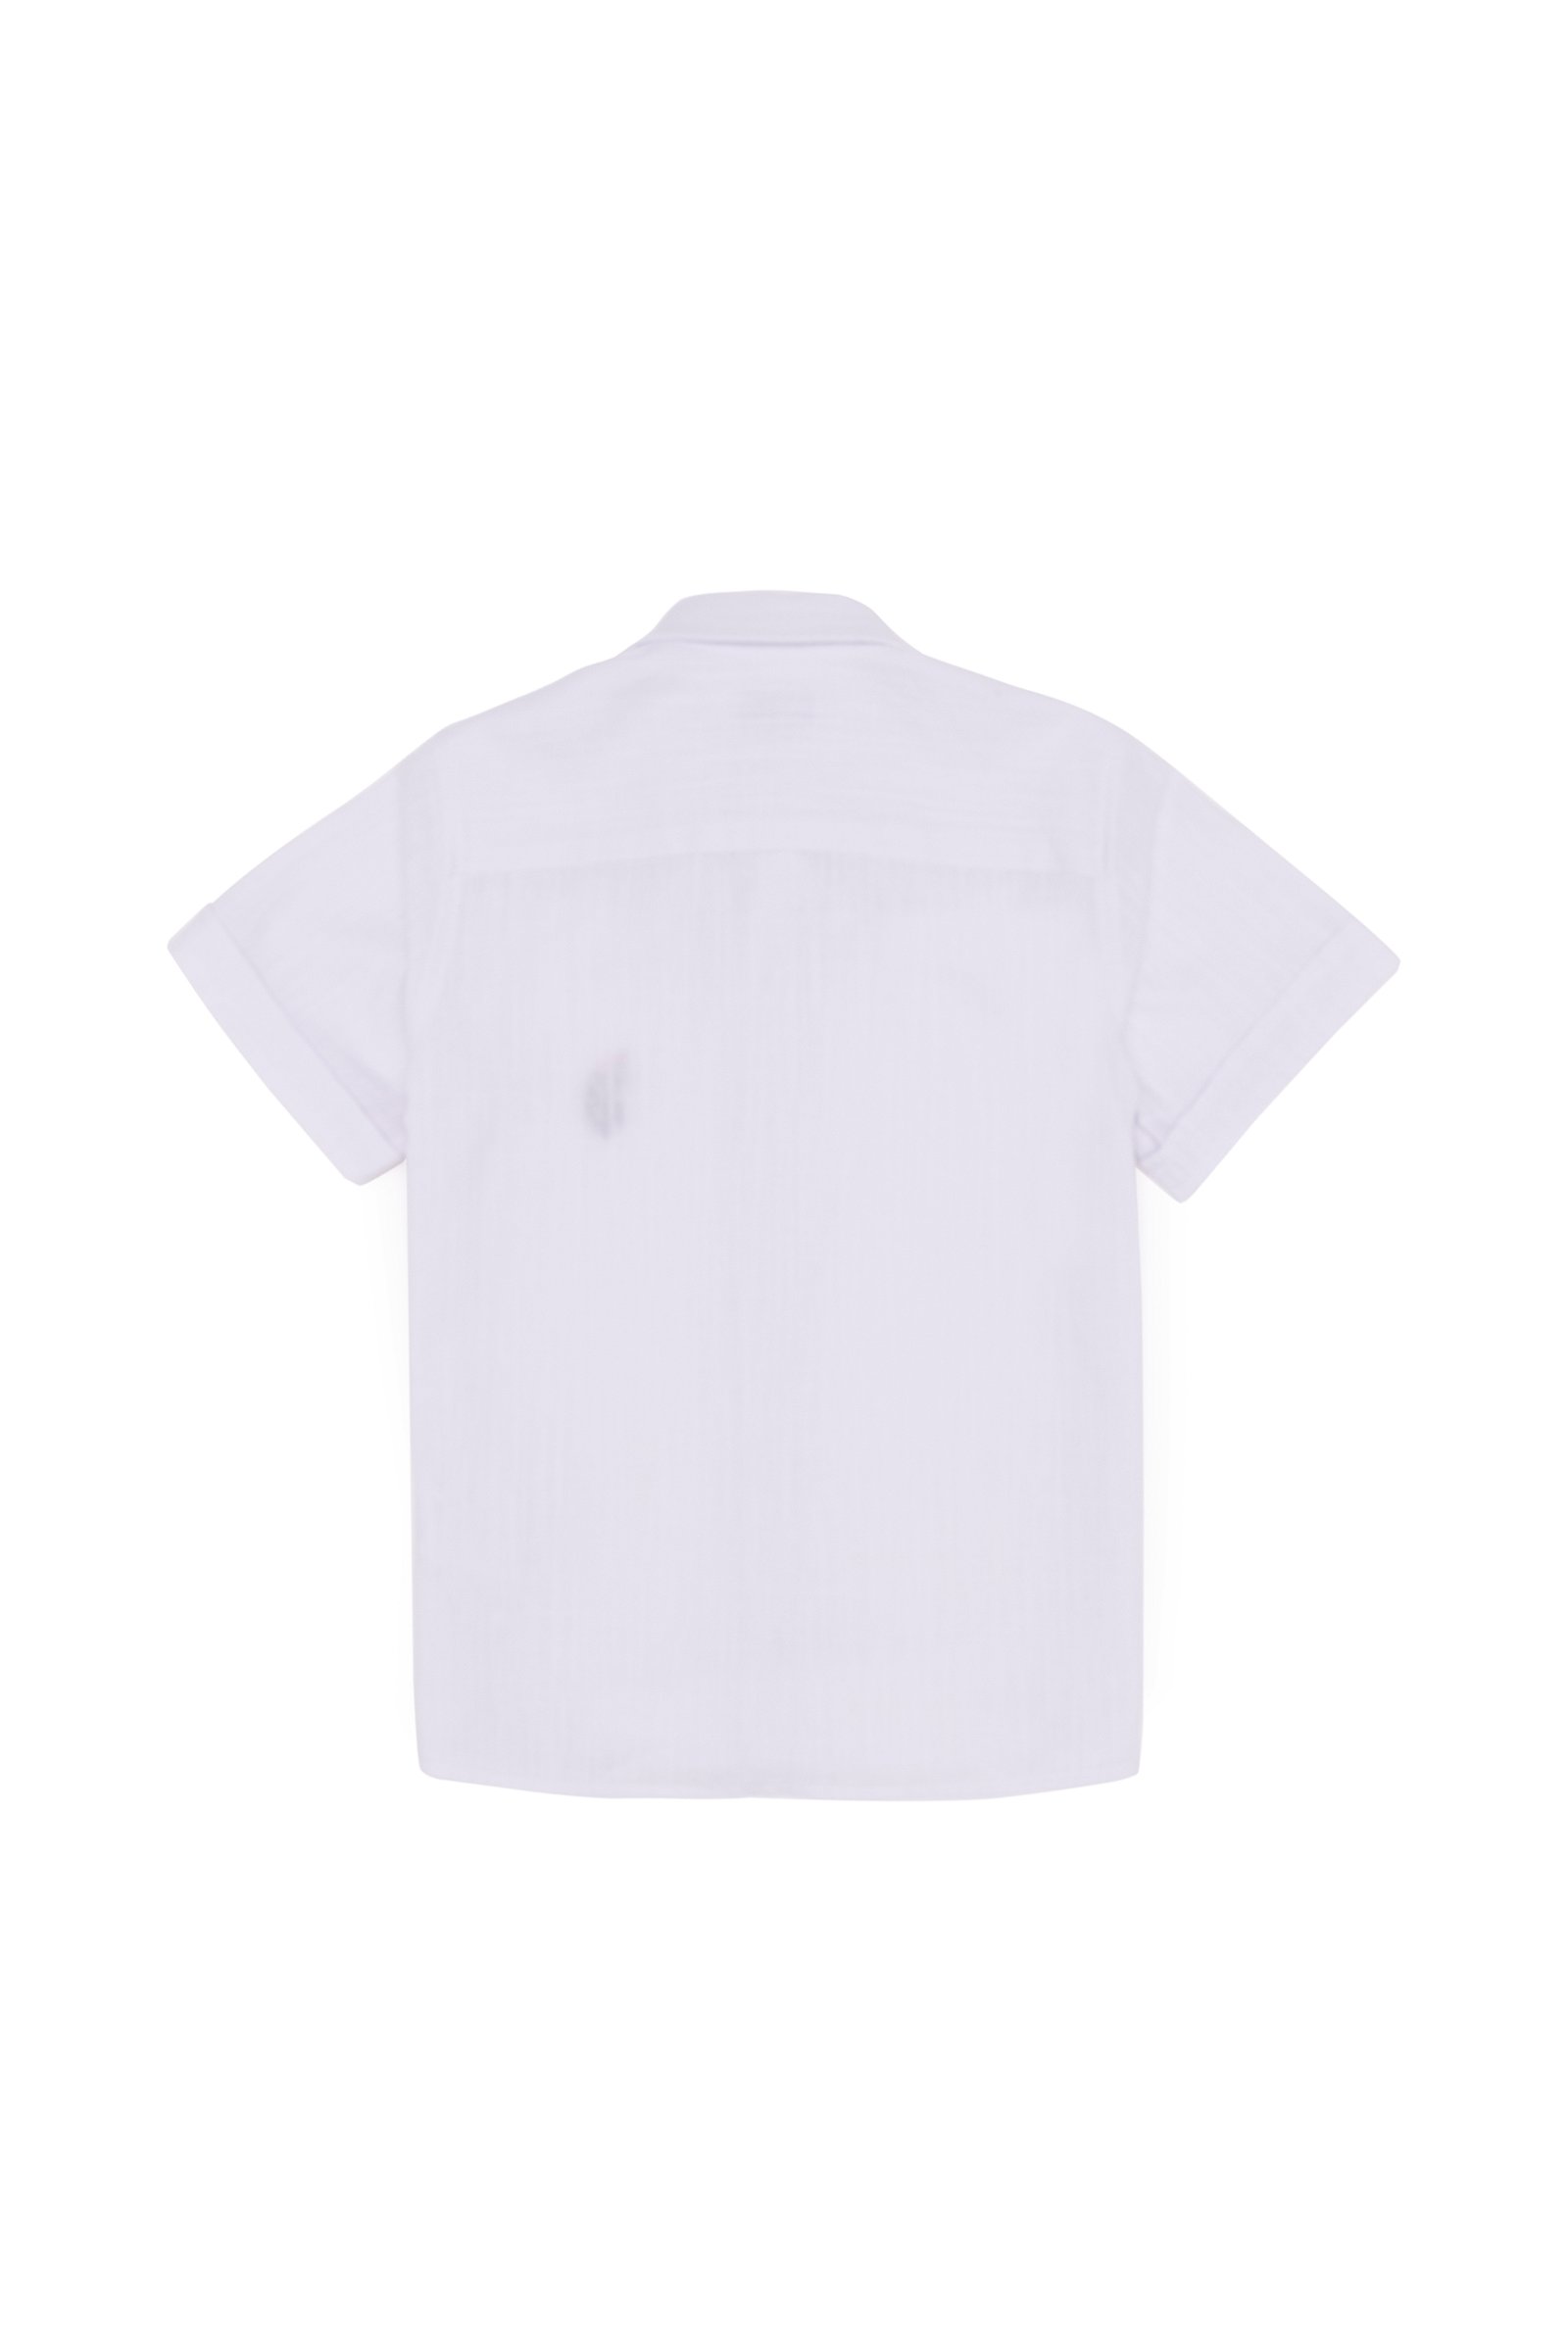 پیراهن  سفید  استاندارد فیت  پسرانه یو اس پولو | US POLO ASSN